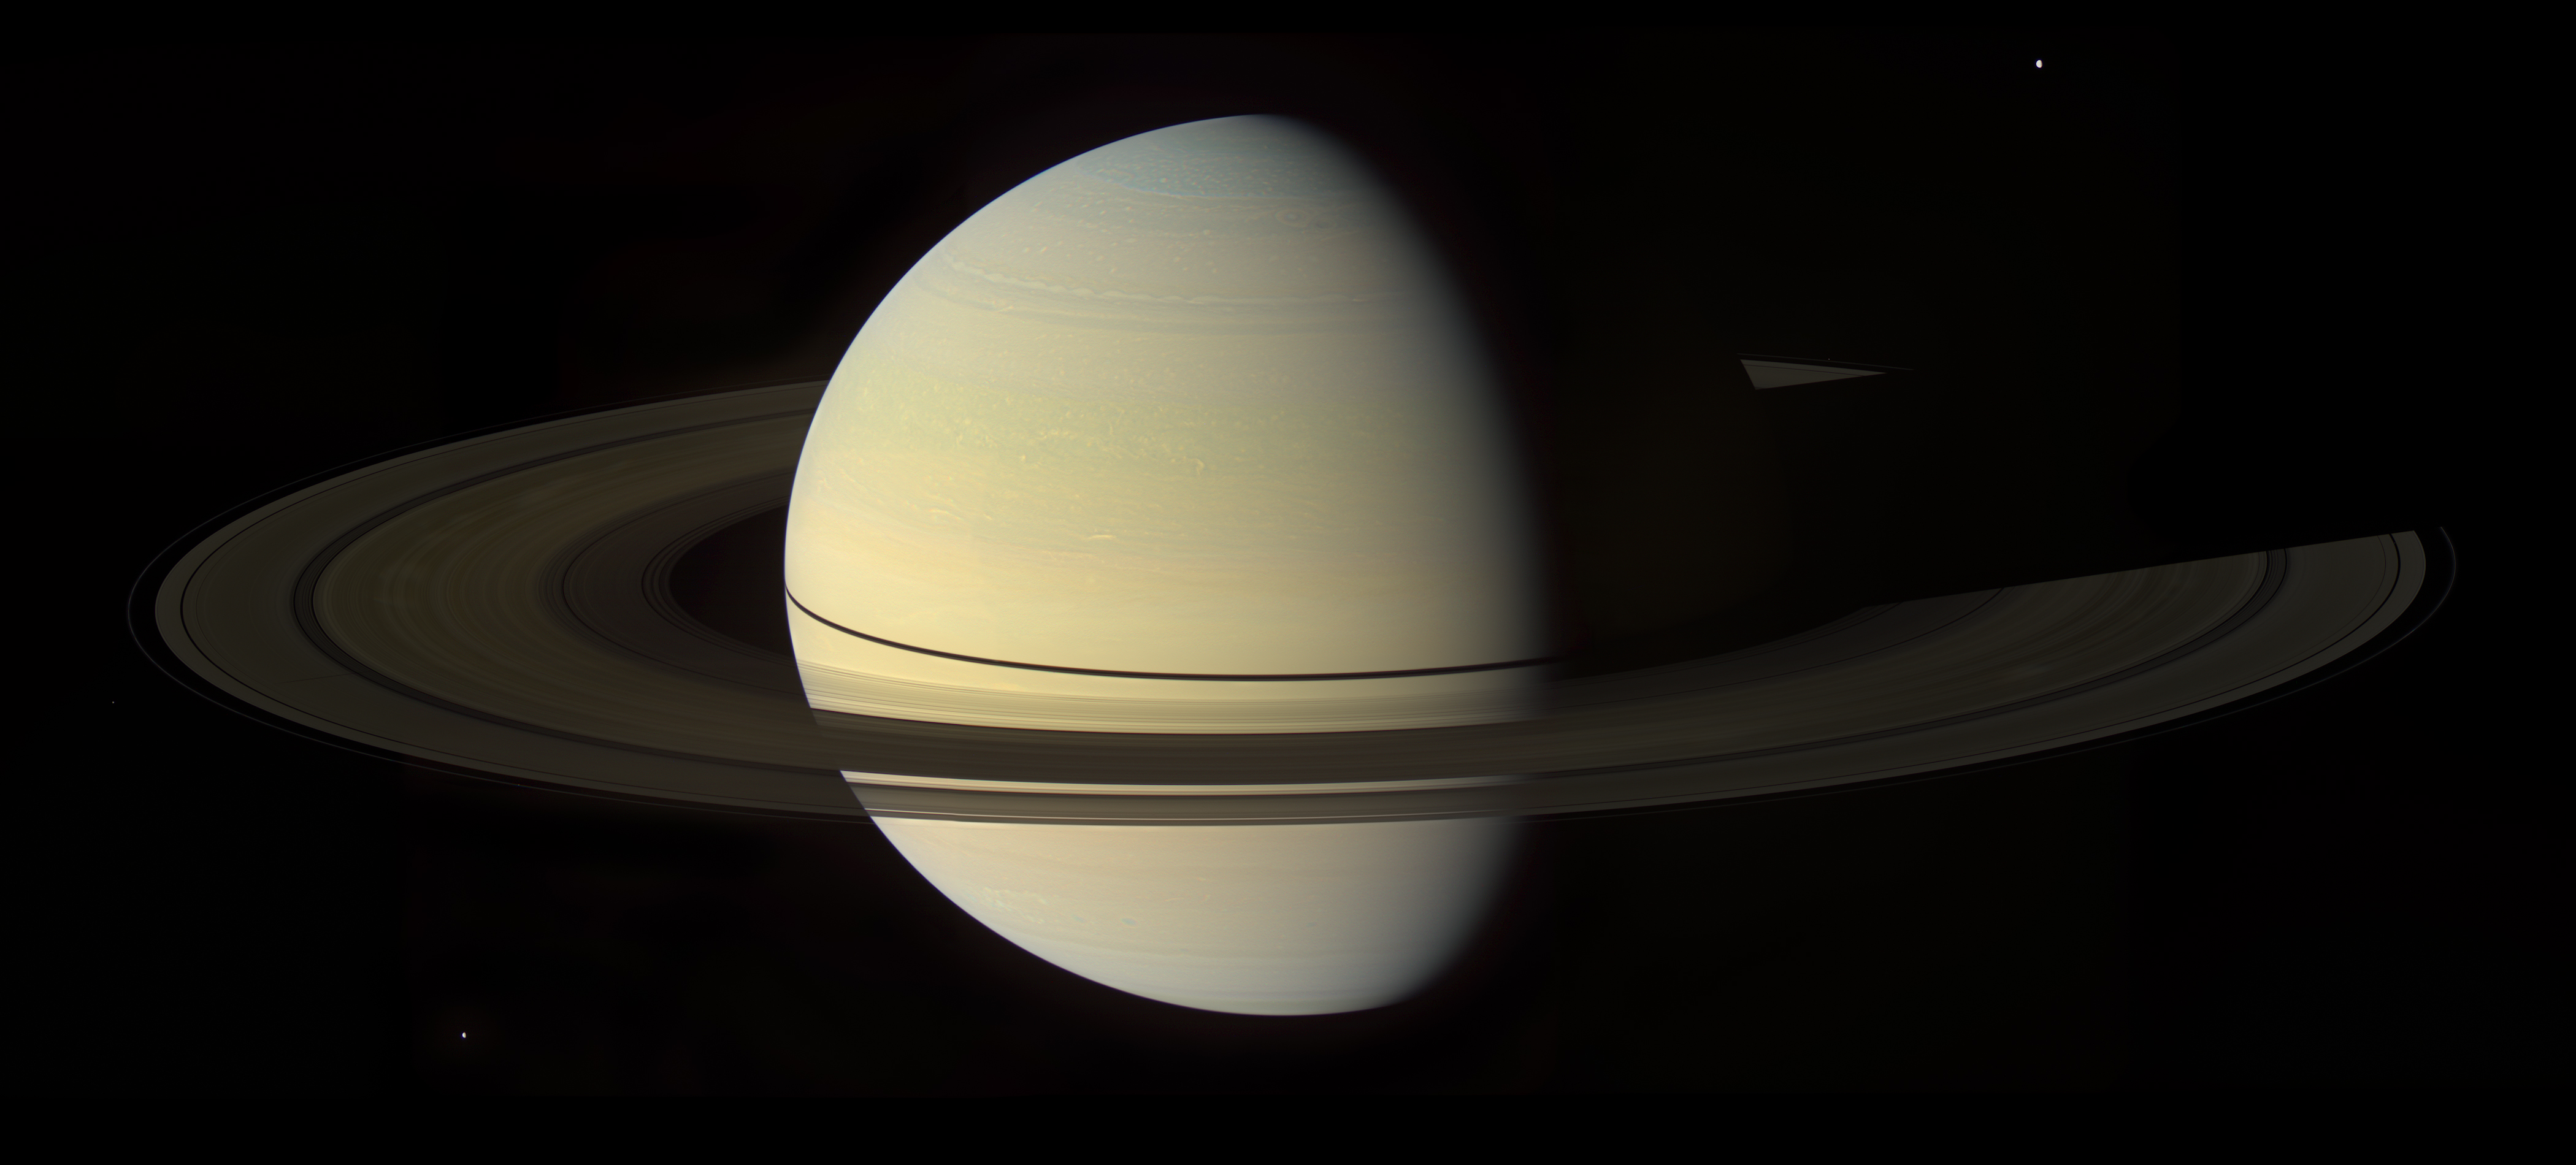 Saturn Planet Cassini Probe Space Solar System 4200x1900